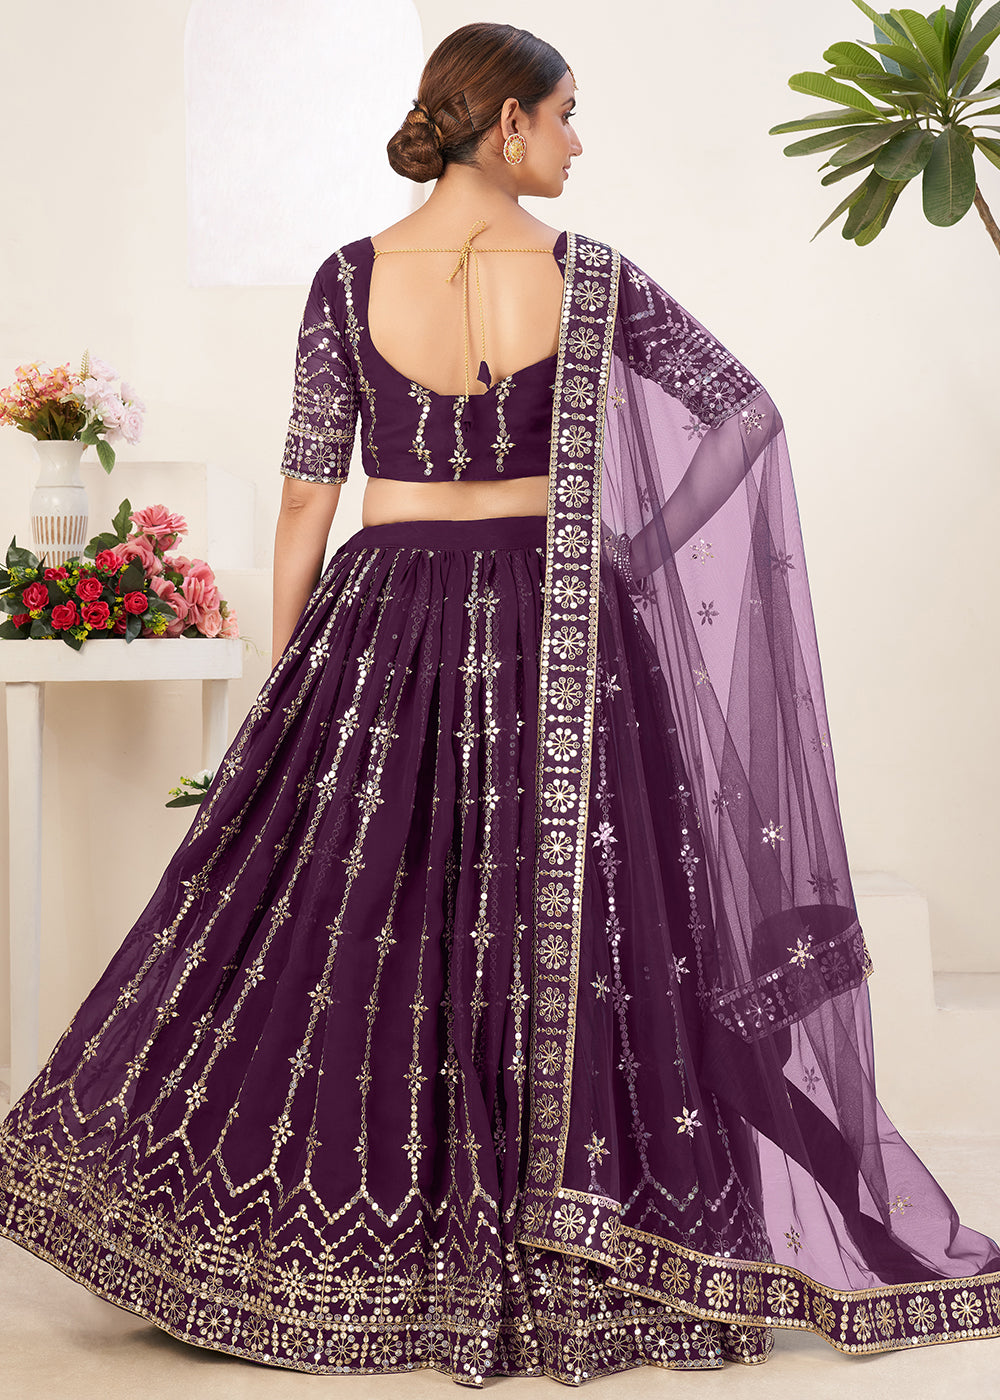 Buy Now Latest Purple Bordered Sequins Sangeet Wear Lehenga Choli Online in USA, UK, Canada & Worldwide at Empress Clothing.